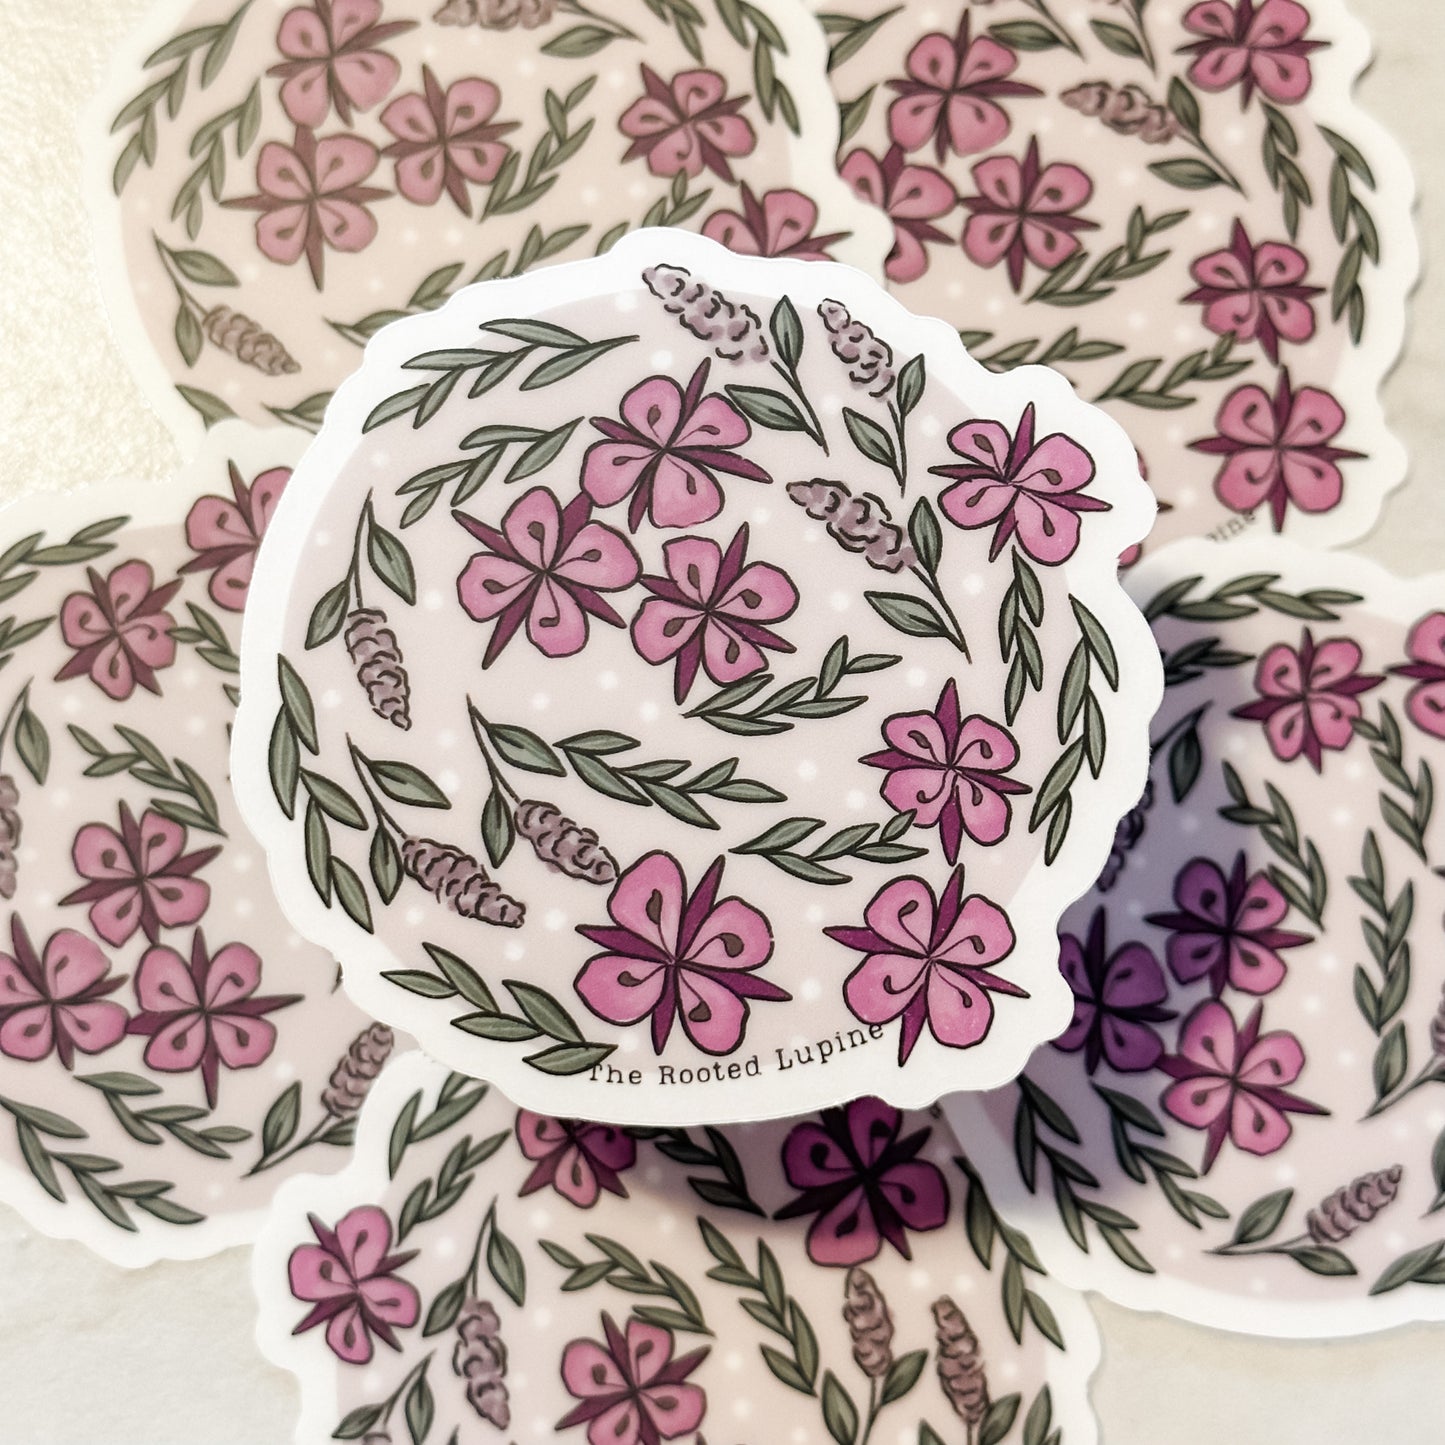 Blooms of Beauty, Fireweed Pattern Sticker